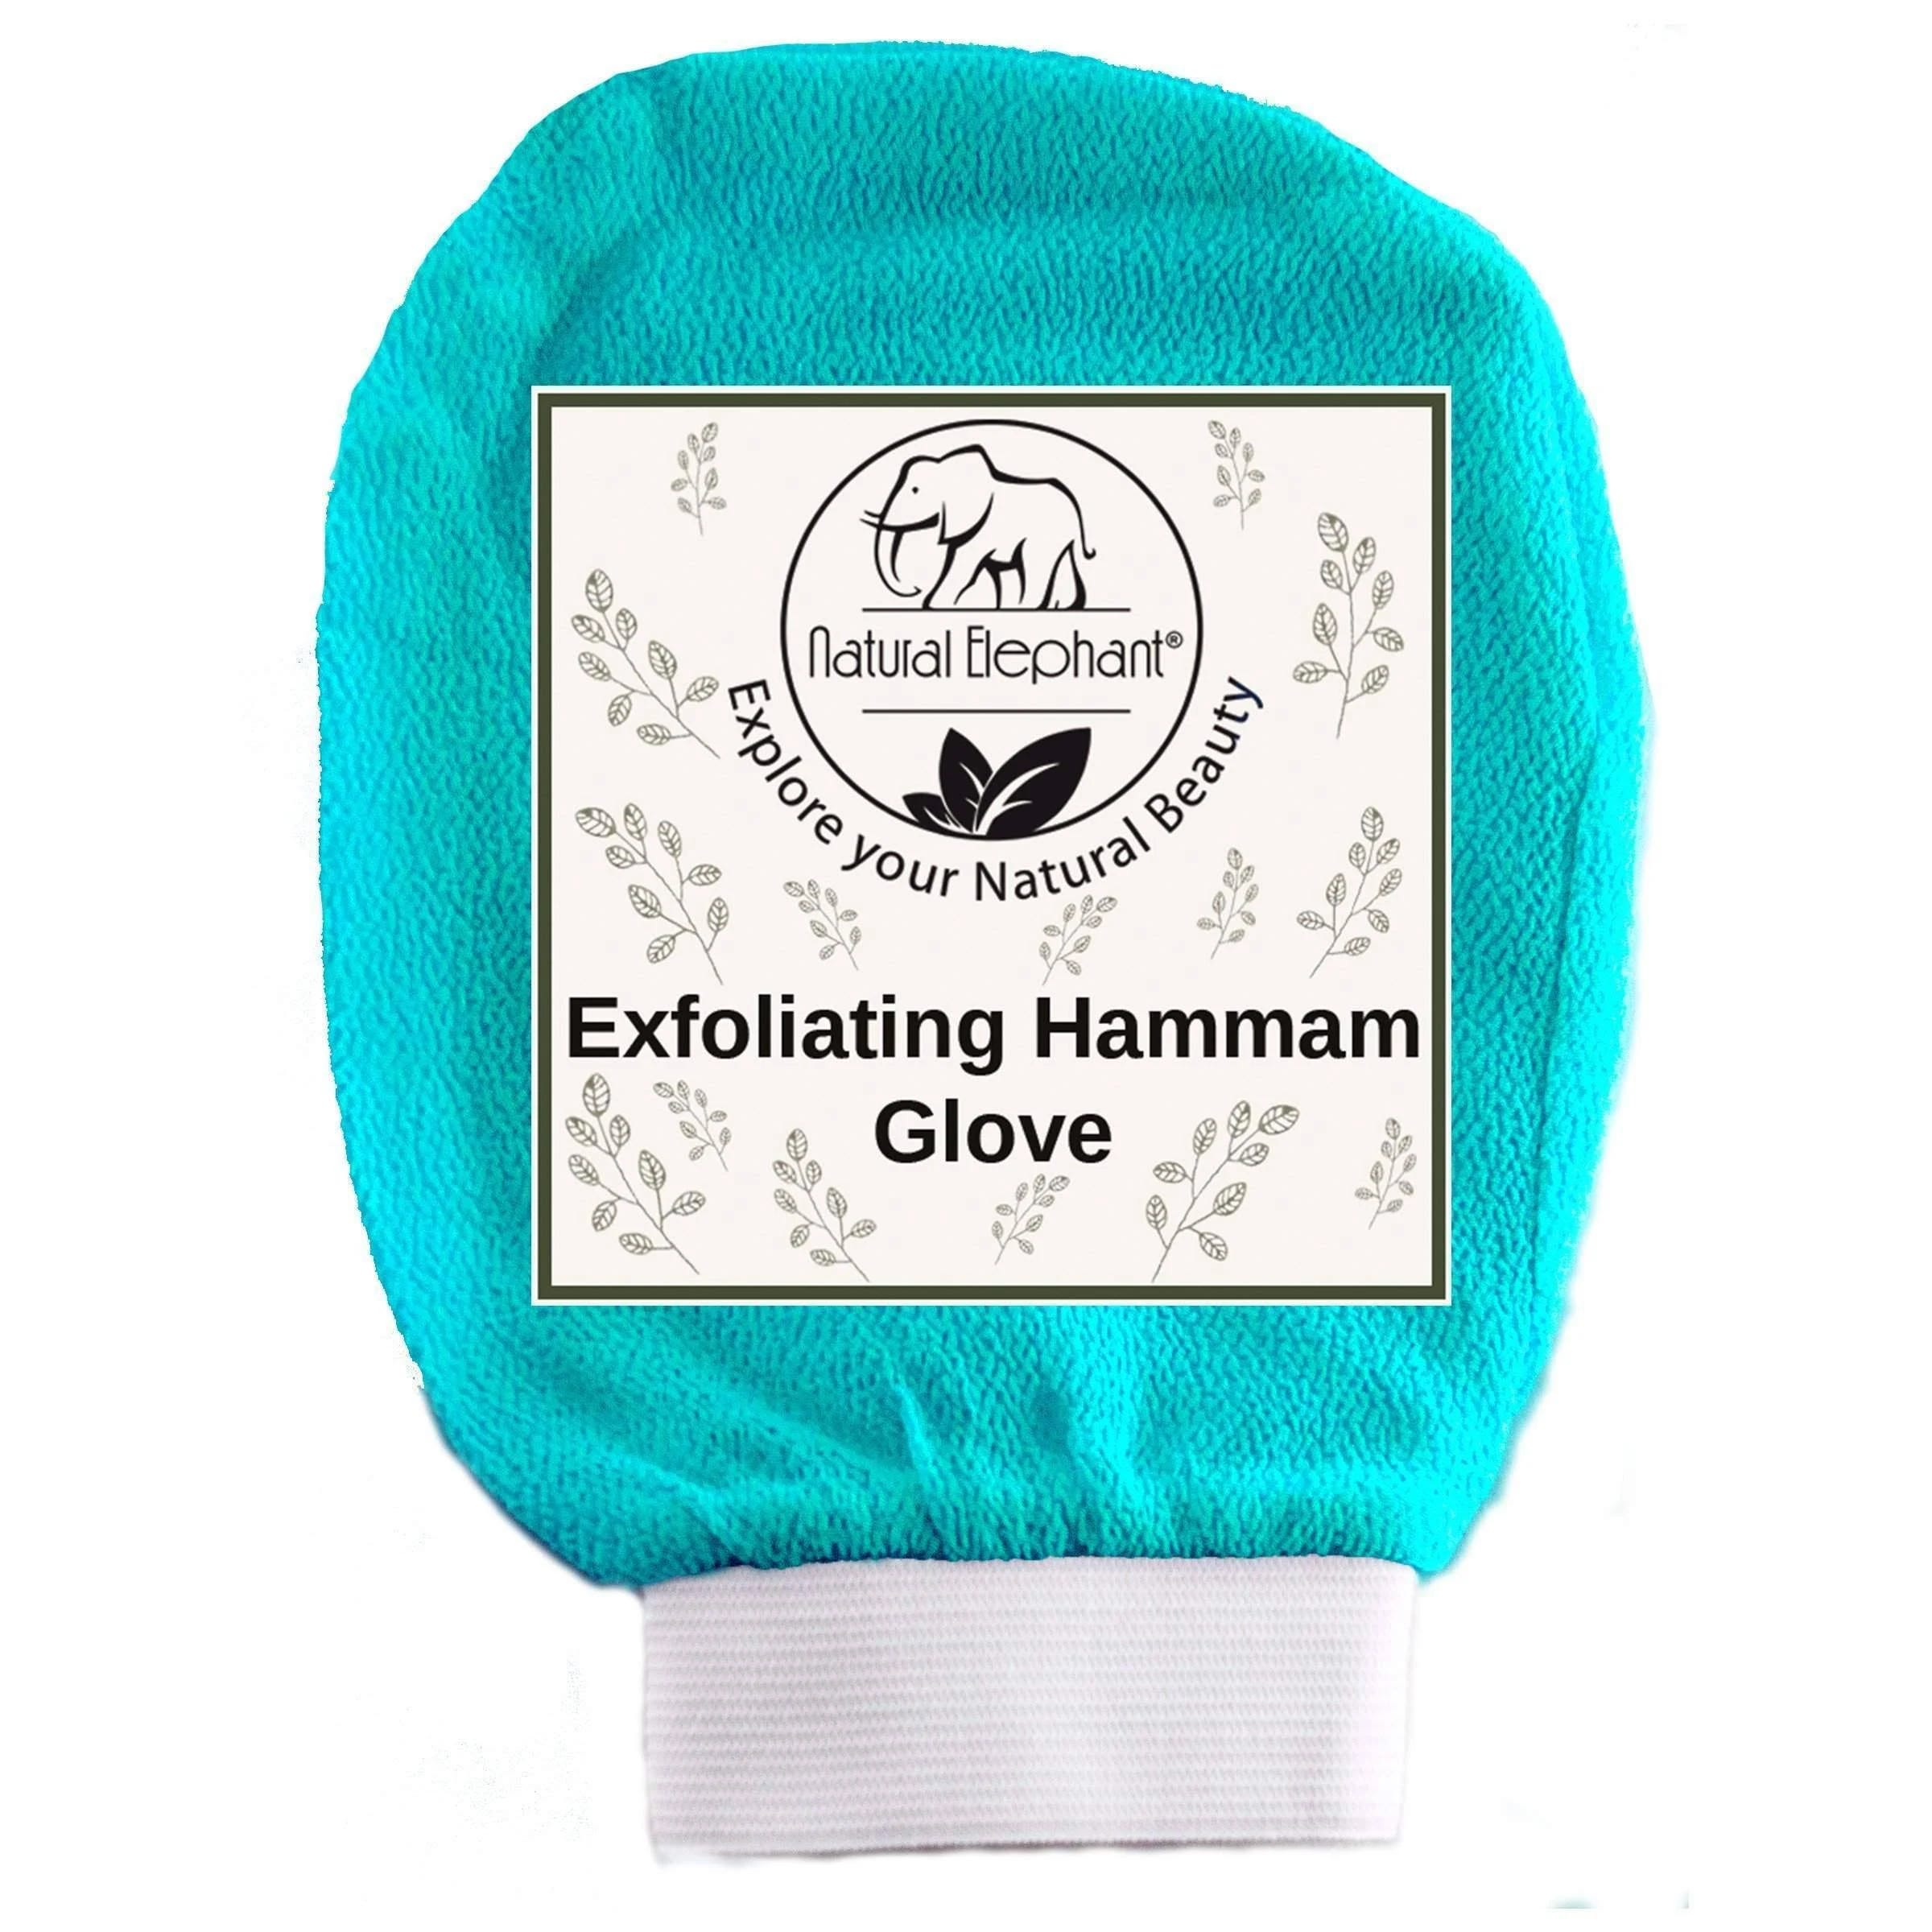 Natural Elephant Exfoliating Hammam Glove for Smooth Skin | Image